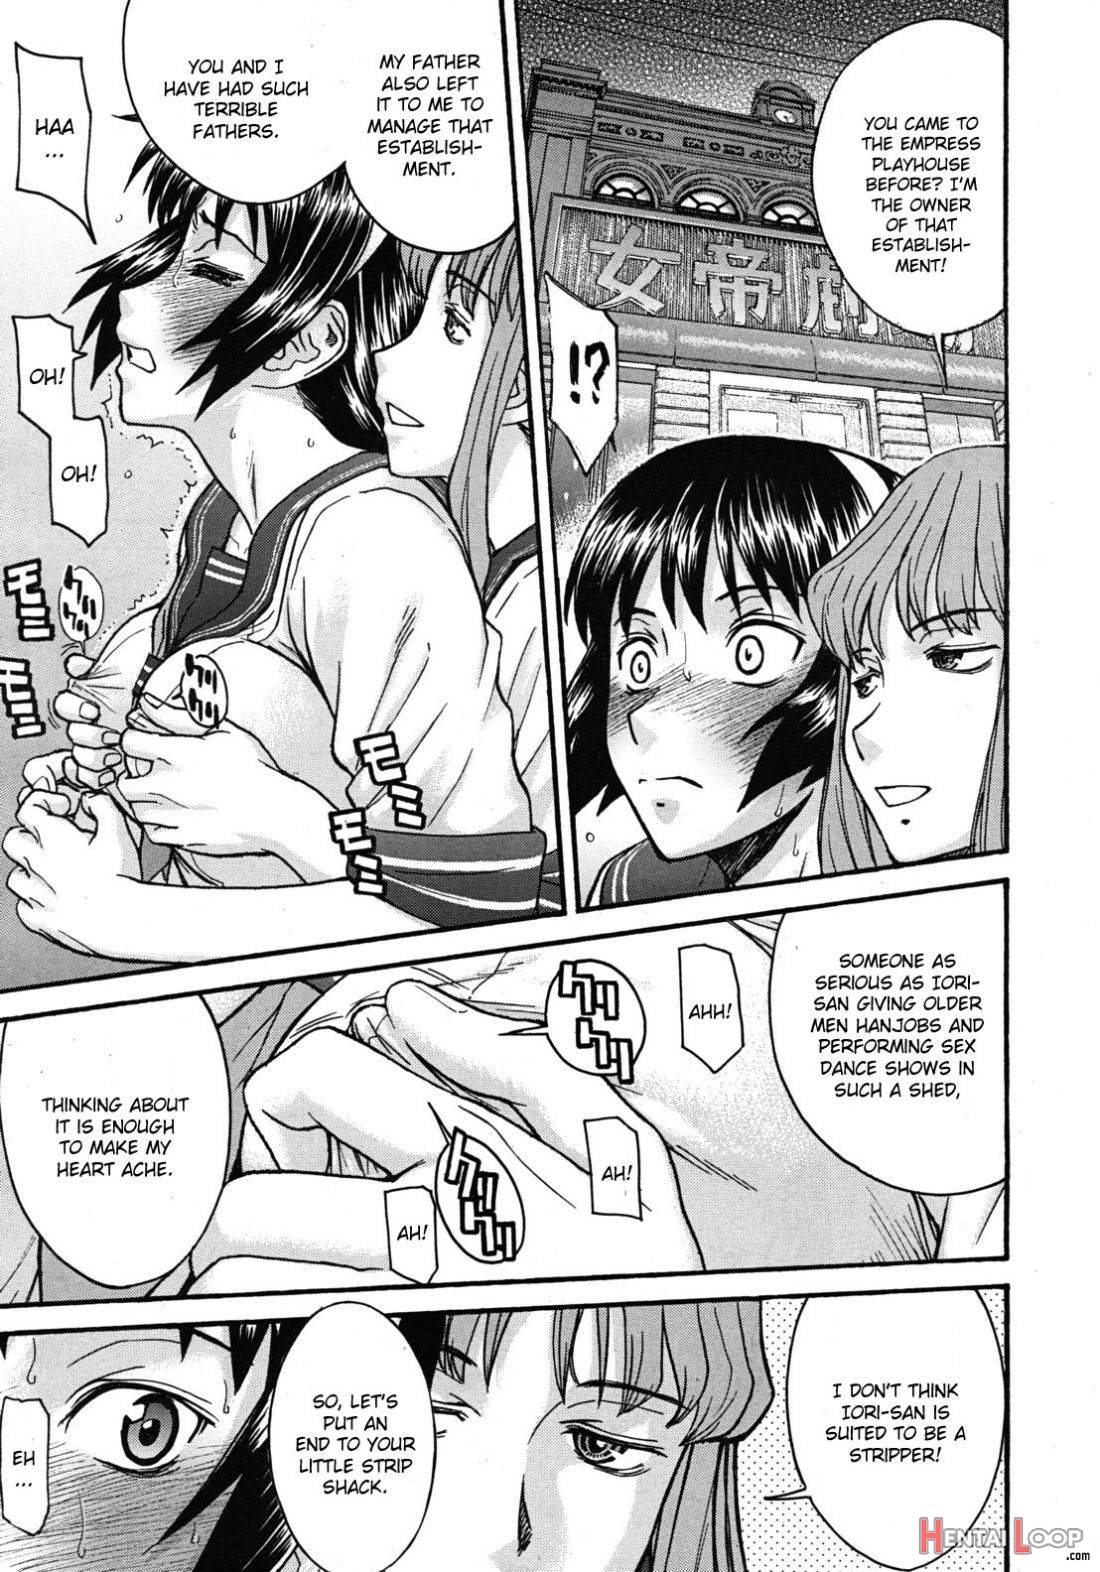 Sailor Fuku to Strip page 3